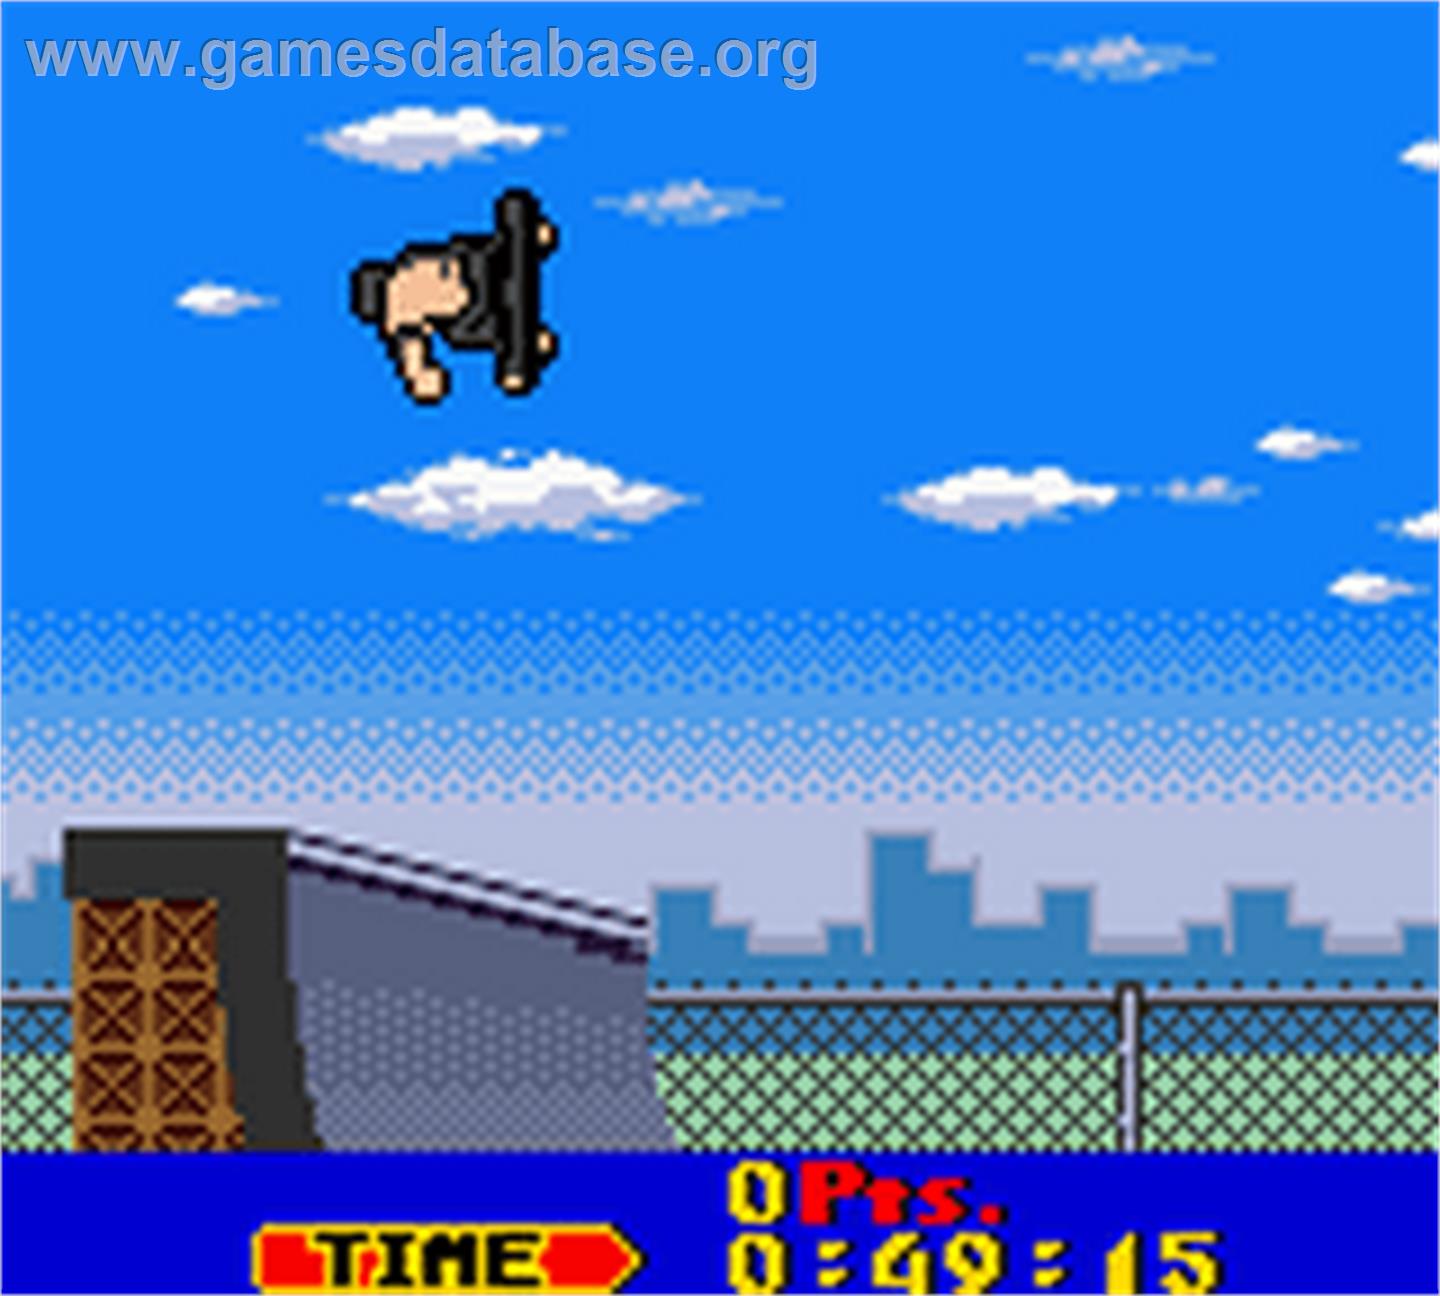 Tony Hawk's Pro Skater - Nintendo Game Boy Color - Artwork - In Game